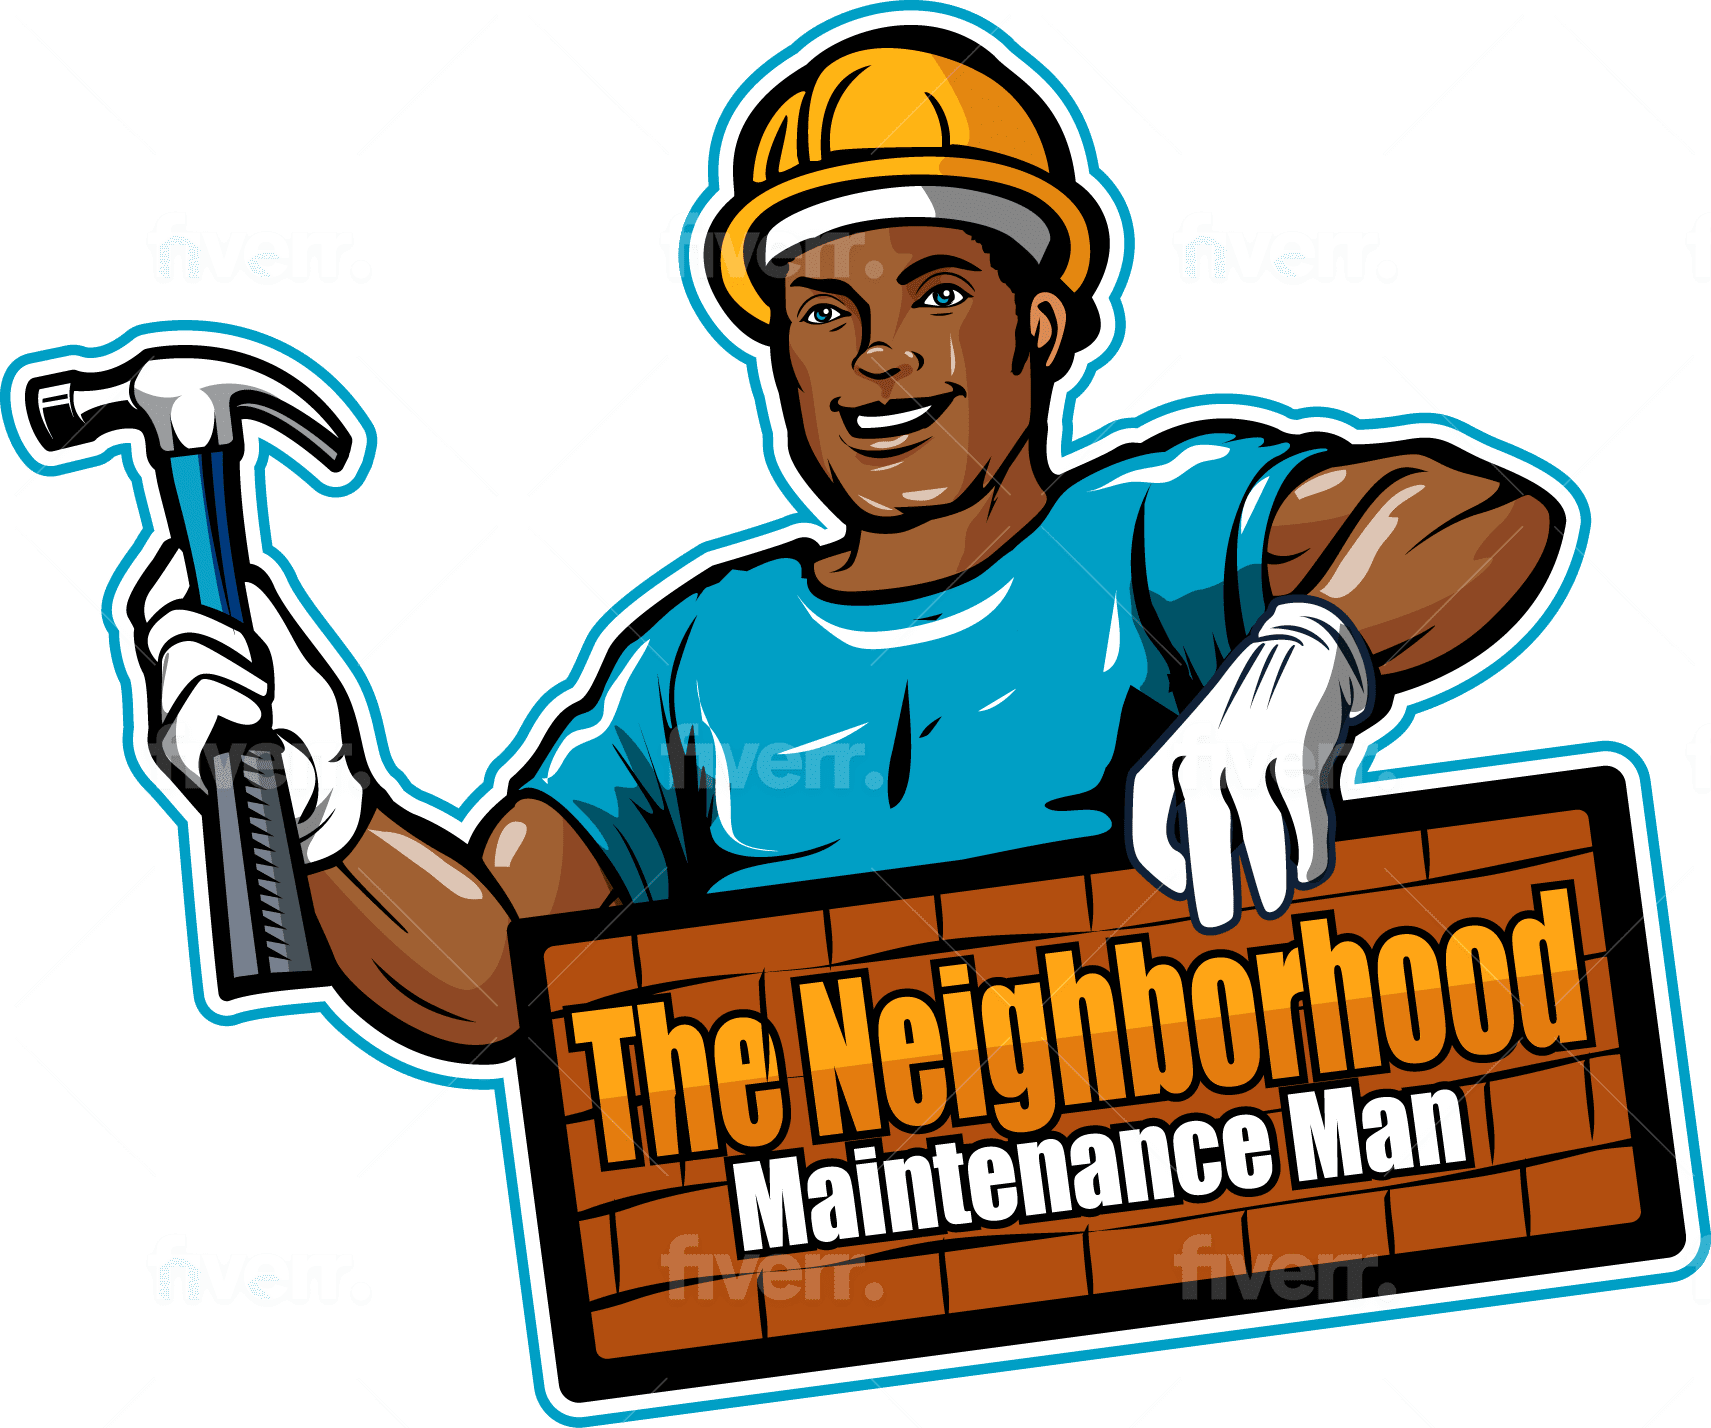 The Neighborhood Maintenance Man